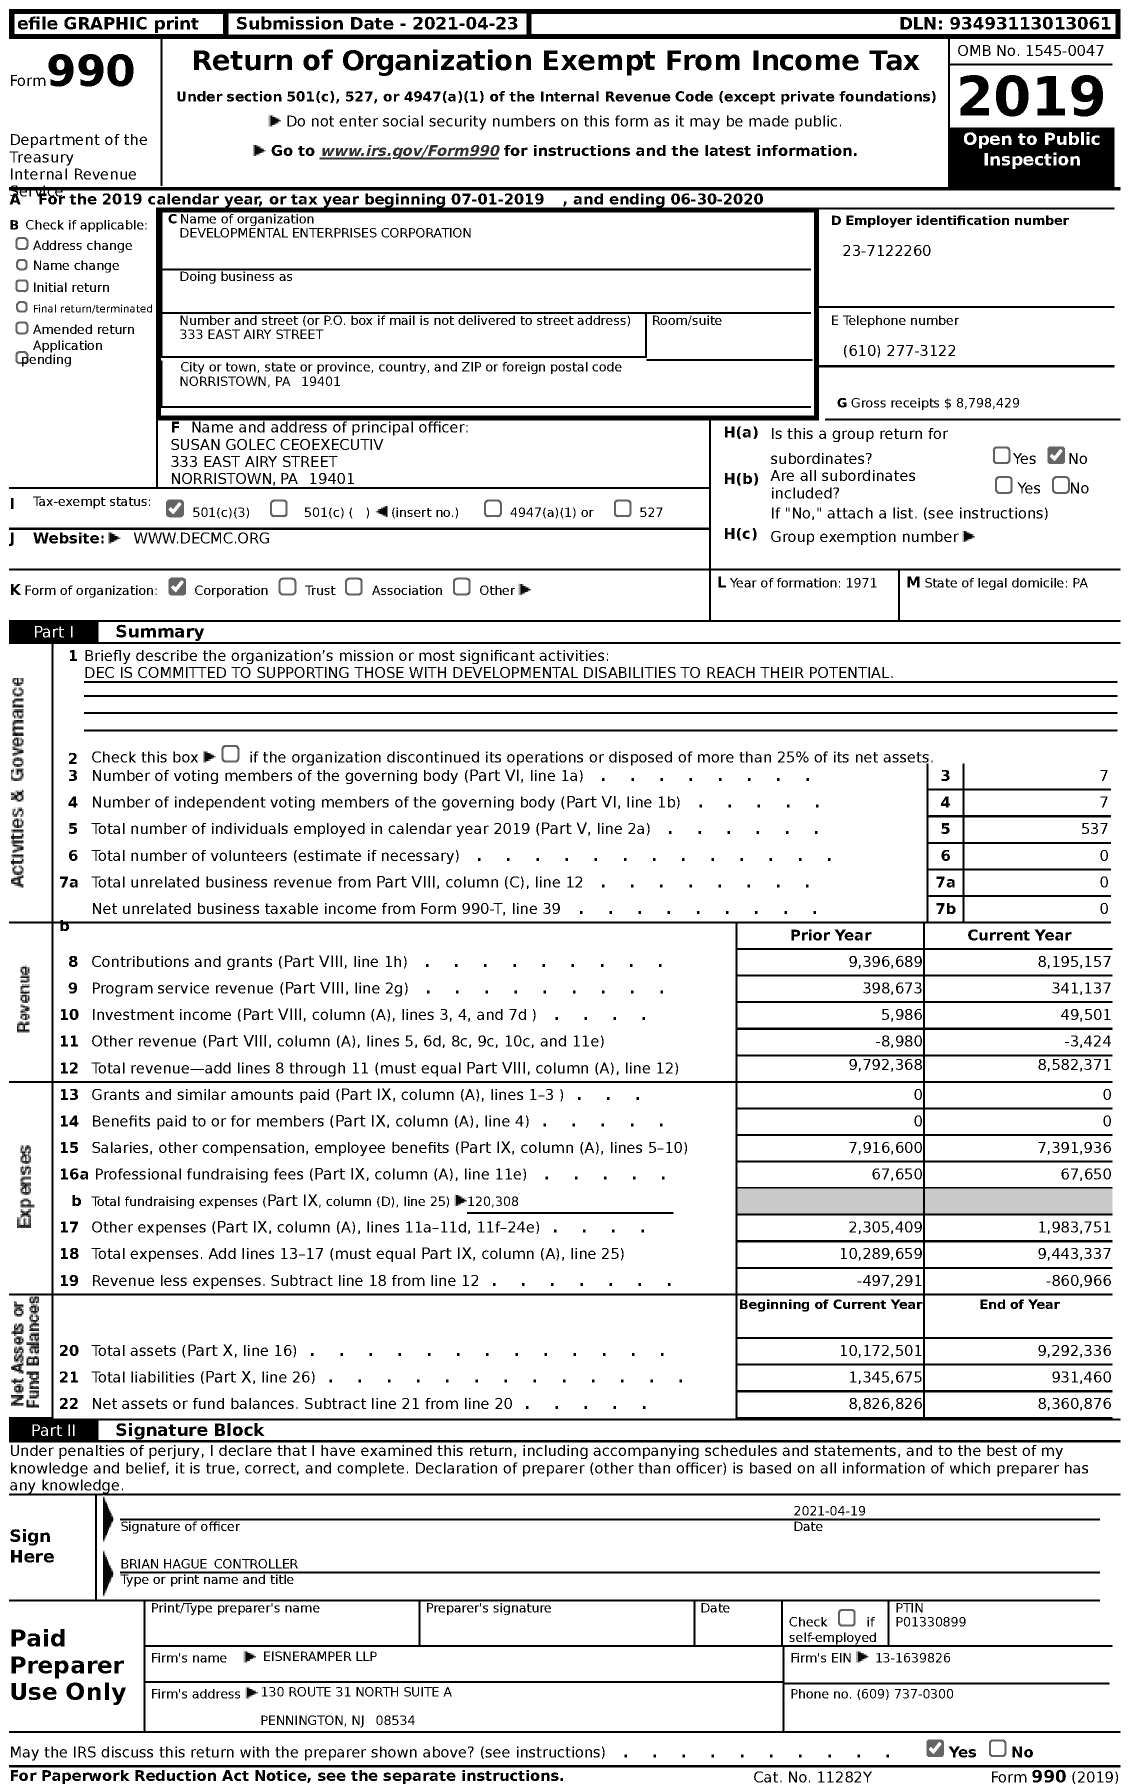 Image of first page of 2019 Form 990 for DEVELOPMENTAL Enterprises Corporation (DEC)